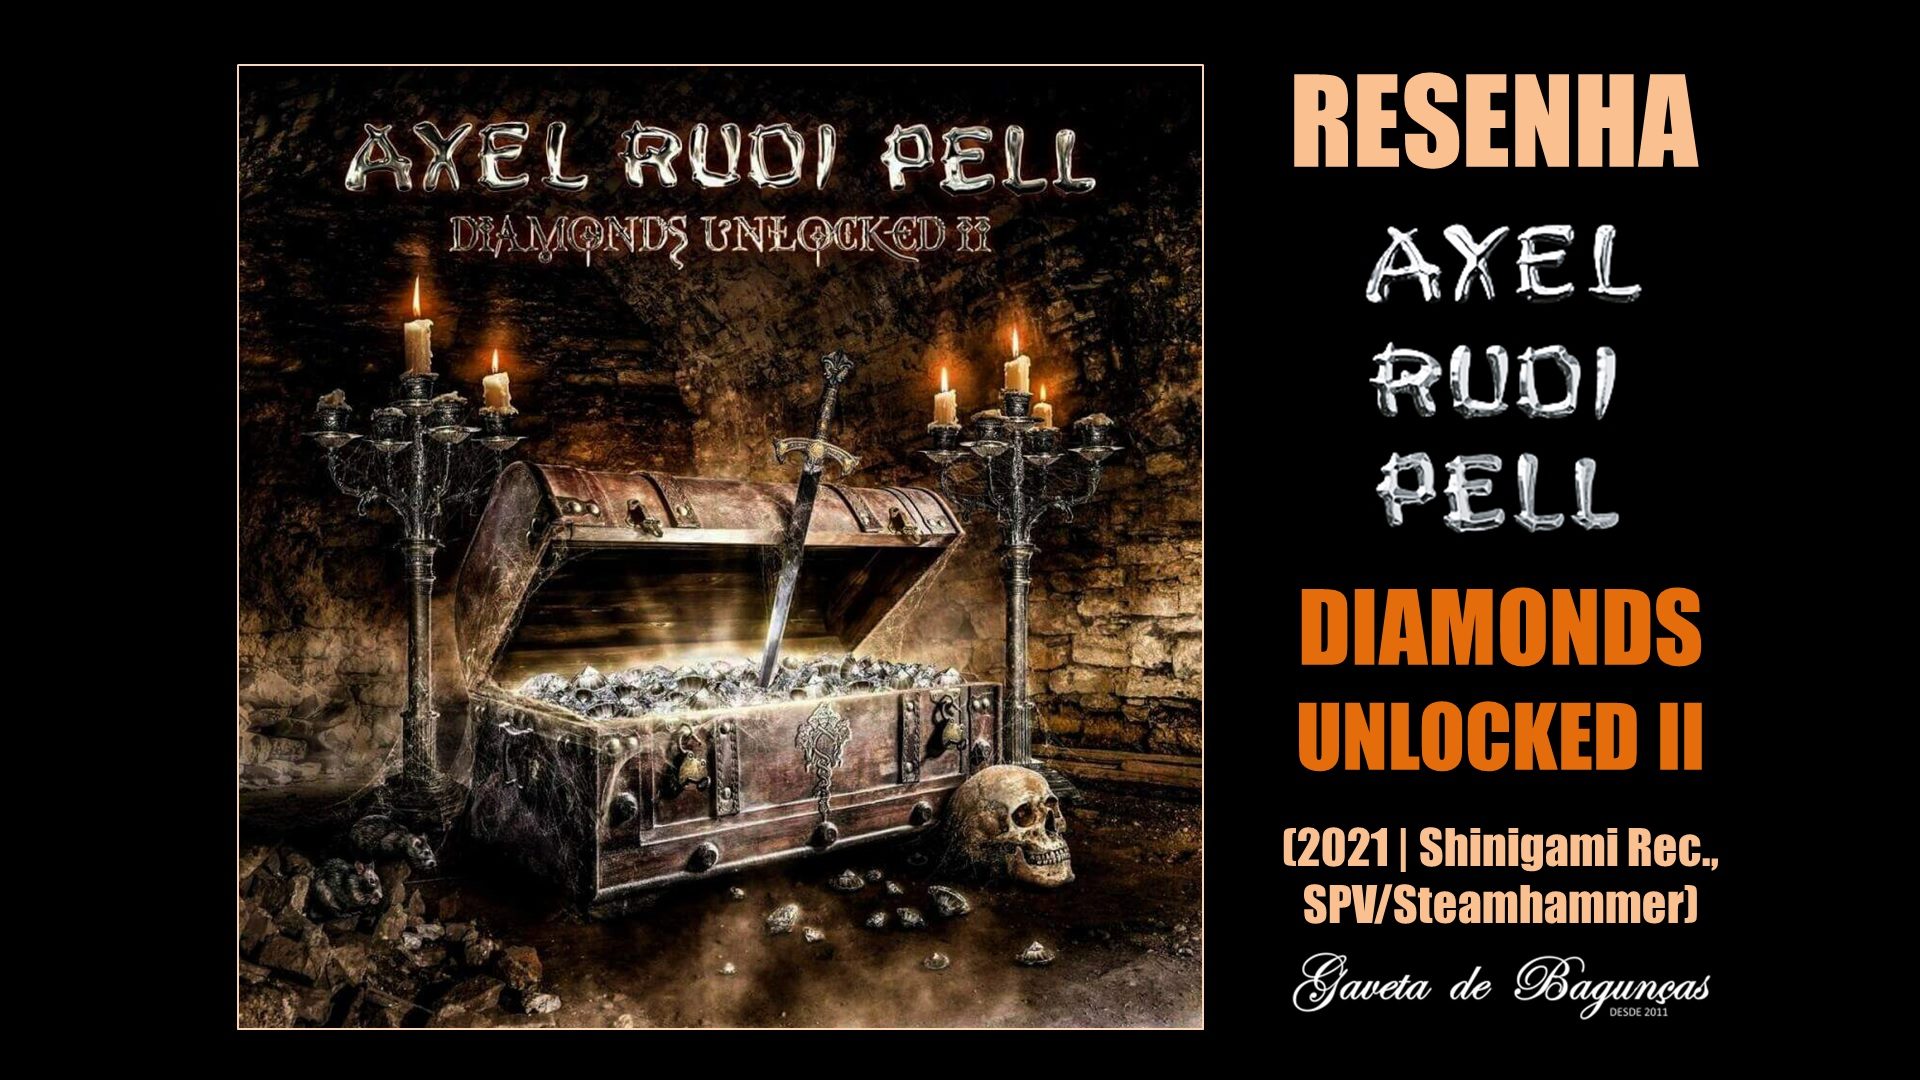 Resenha de "Diamonds Unlocked II", 20º álbum da banda alemã de heavy/power metal liderada pelo guitarrista alemão Axel Rudi Pell.